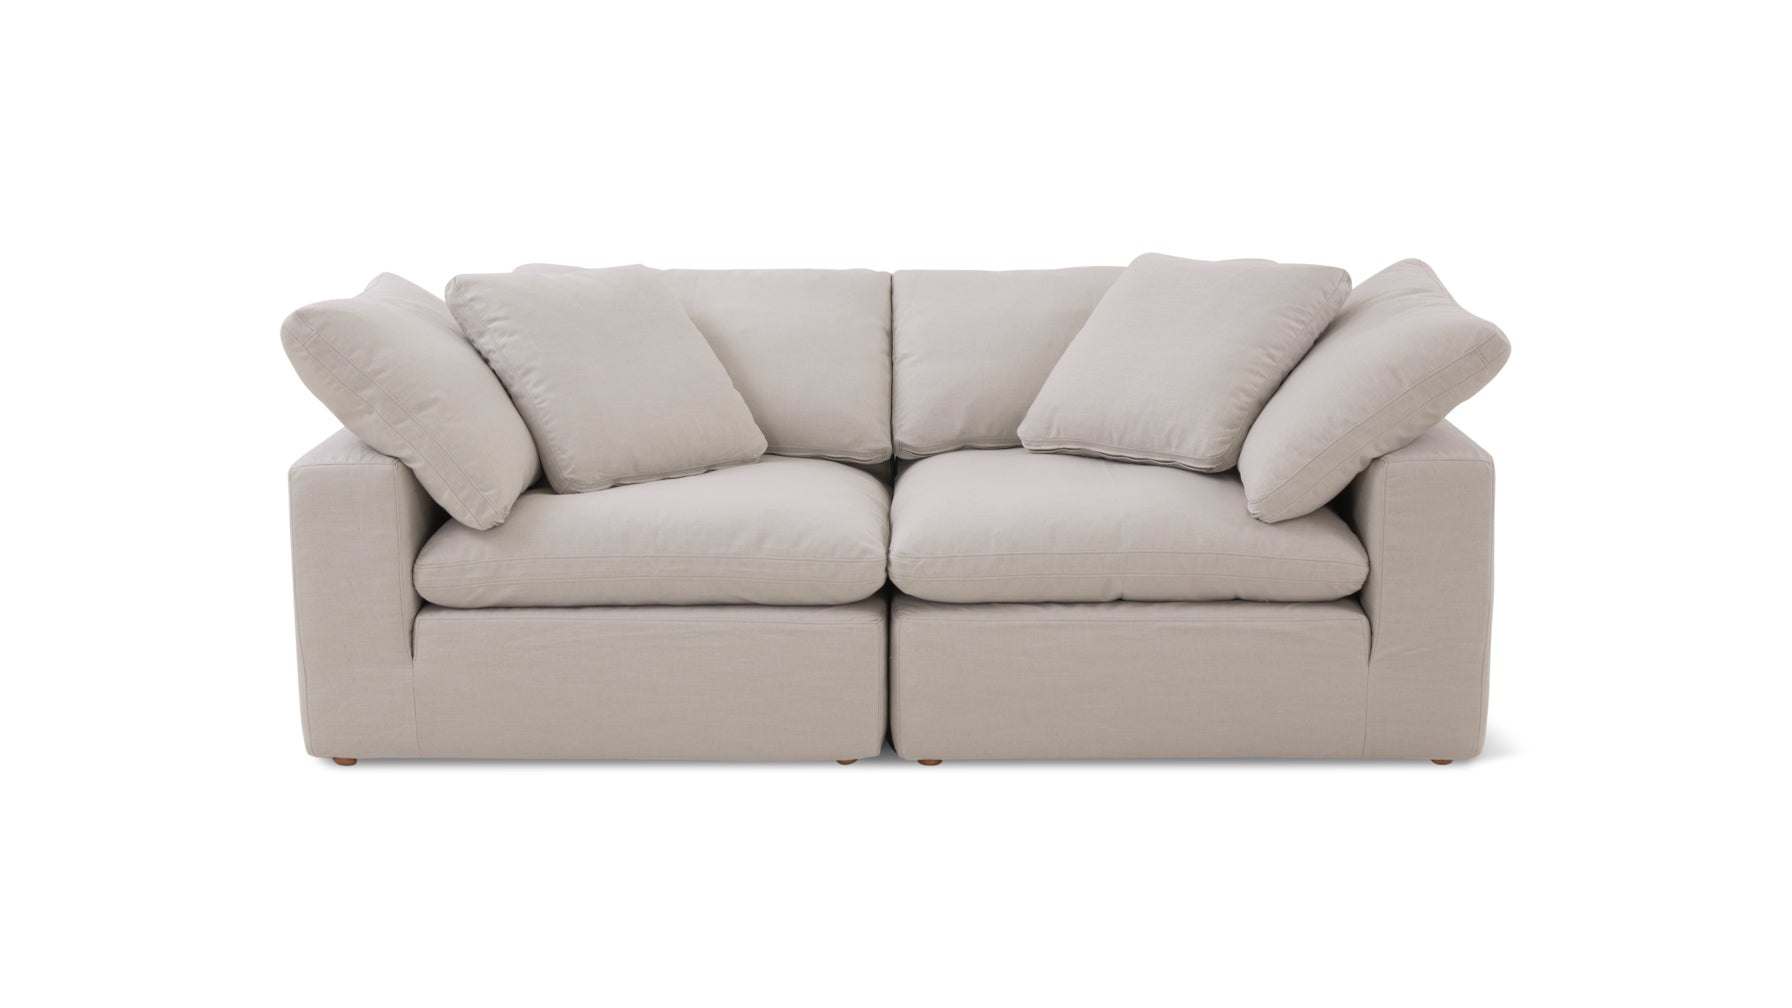 Movie Night™ 2-Piece Modular Sofa, Standard, Clay - Image 1